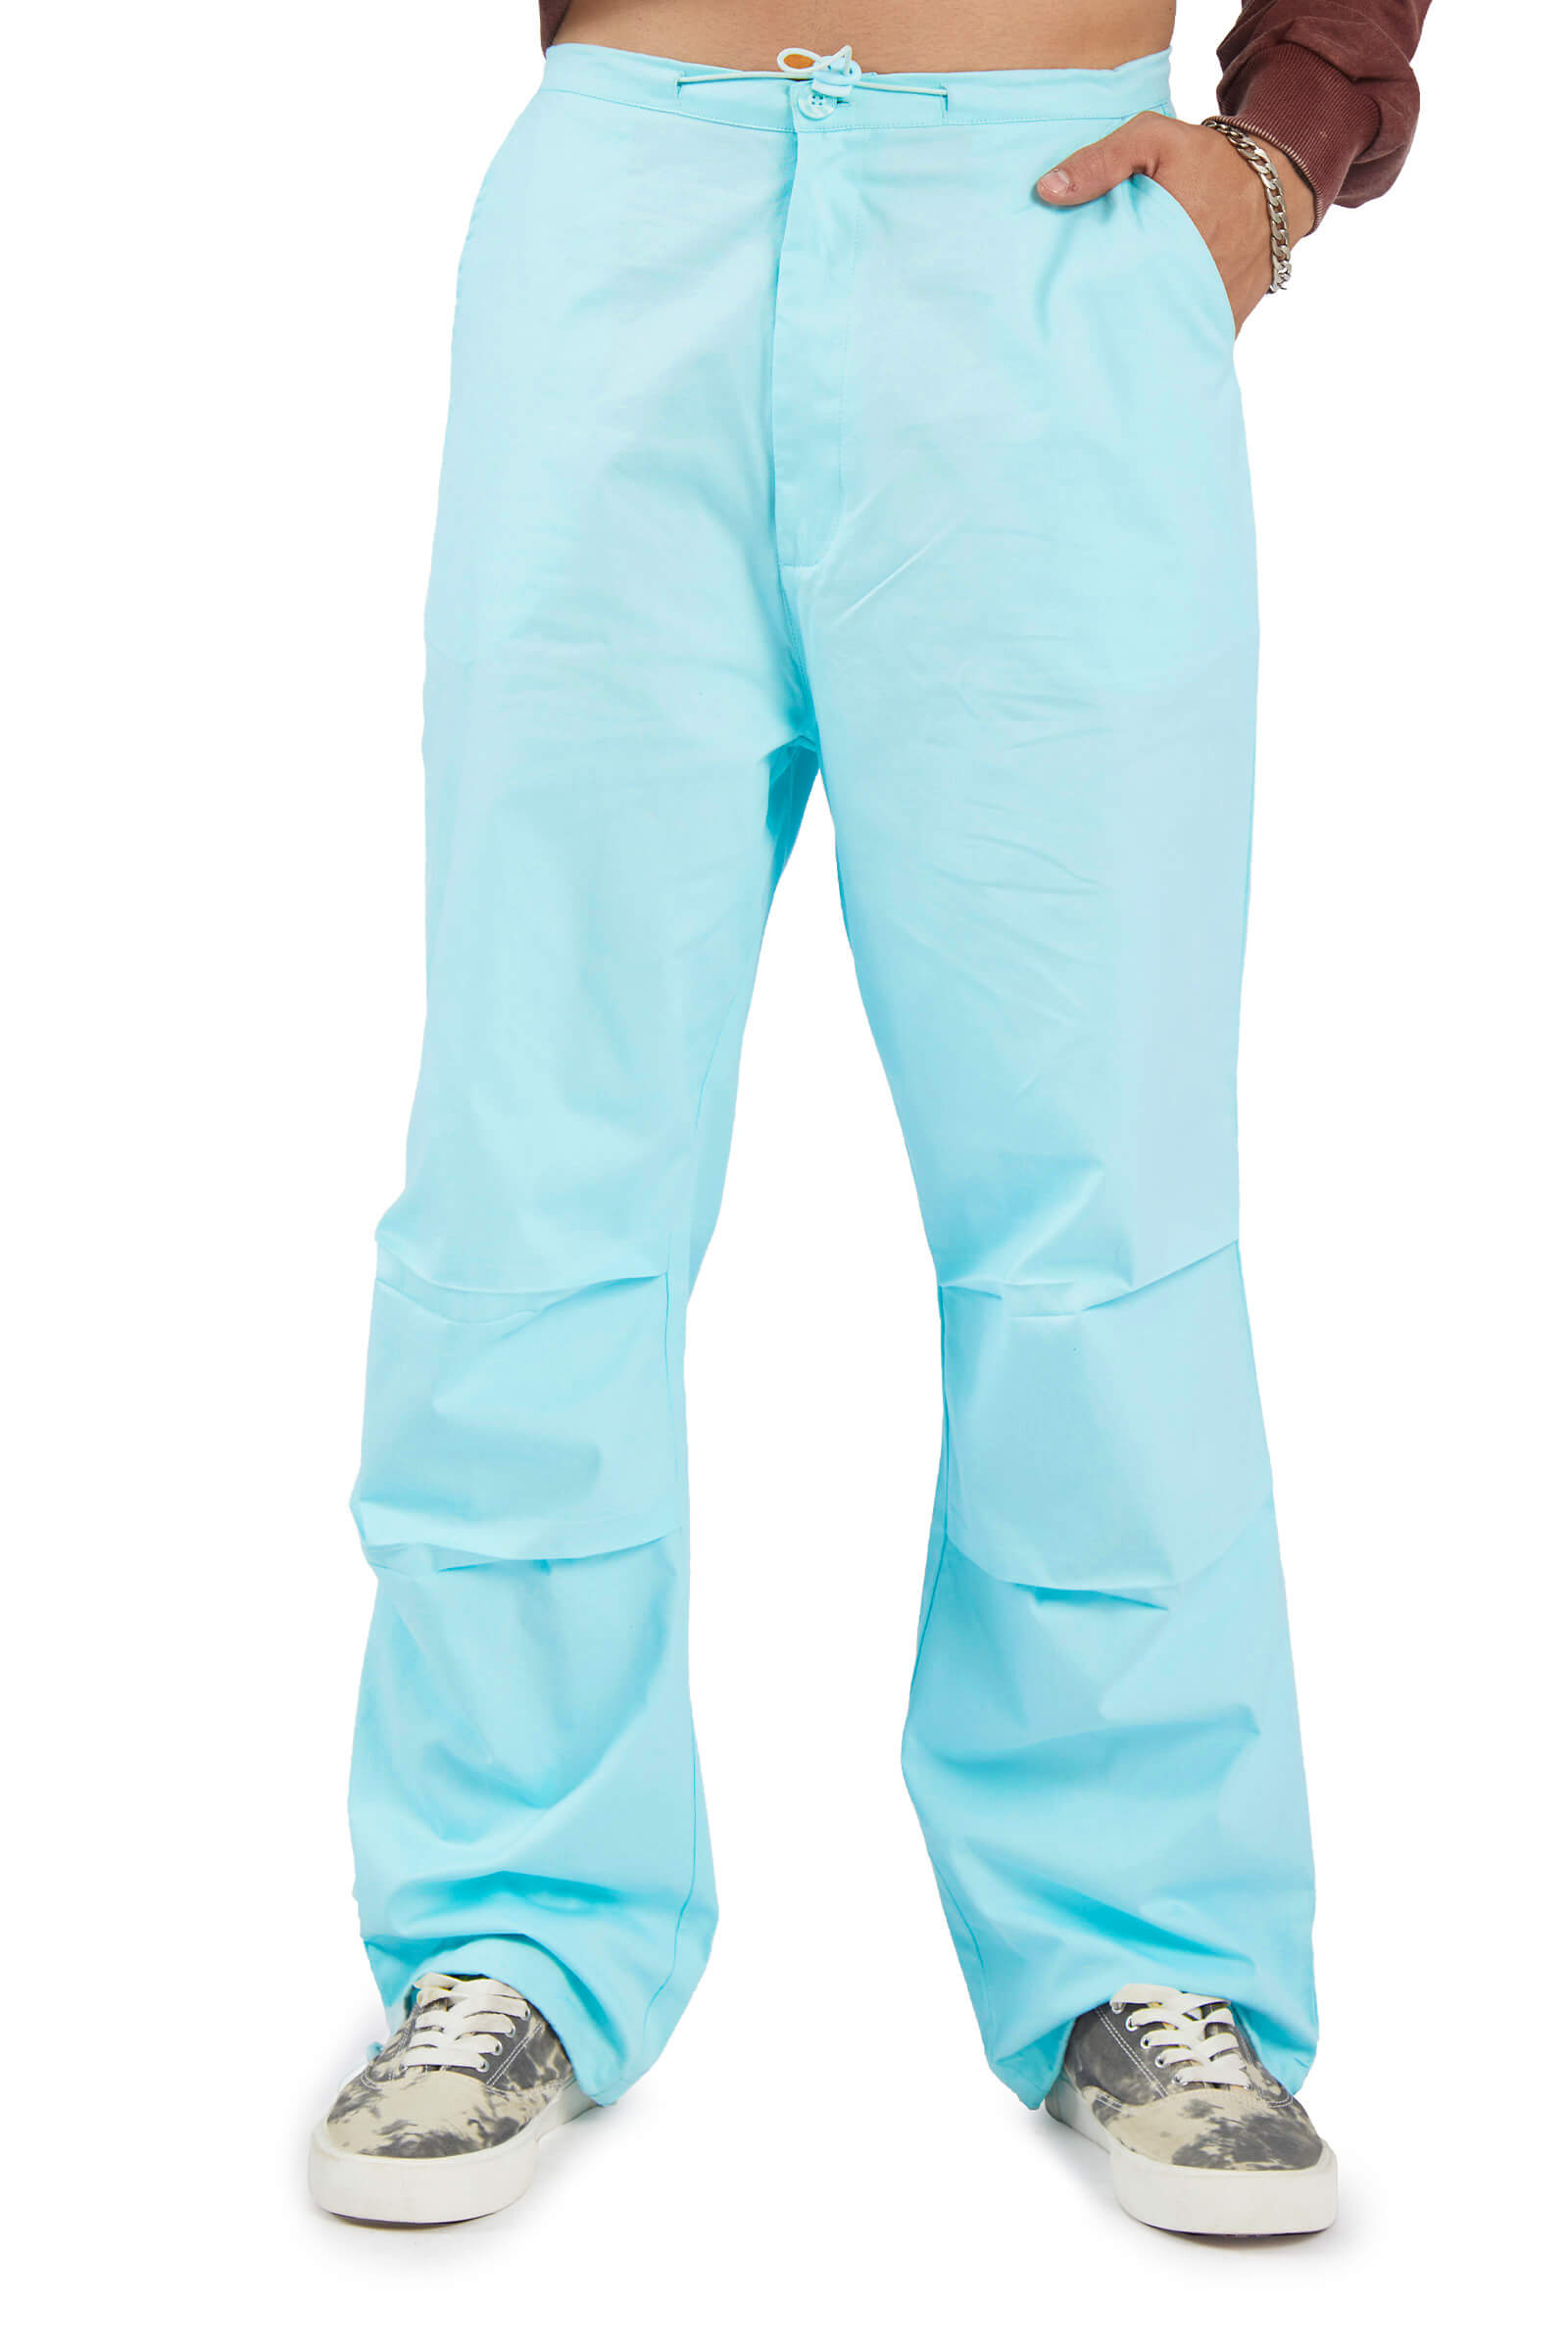 Bershka nylon parachute pants in blue  ASOS